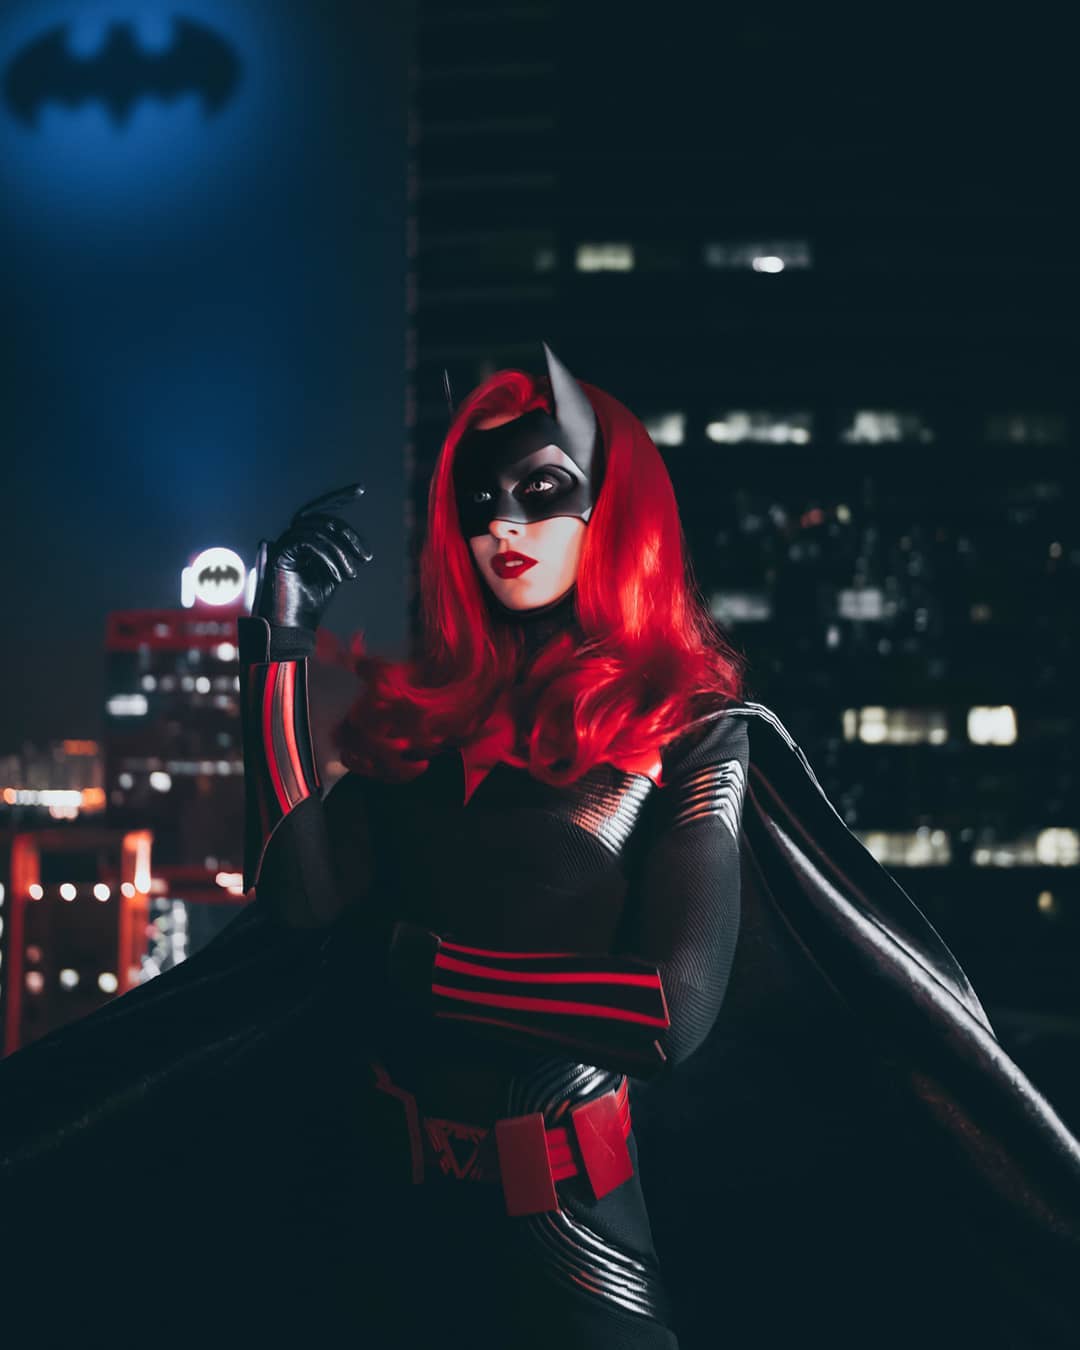 batwoman cosplay by kerri_nova photo by egor_12345